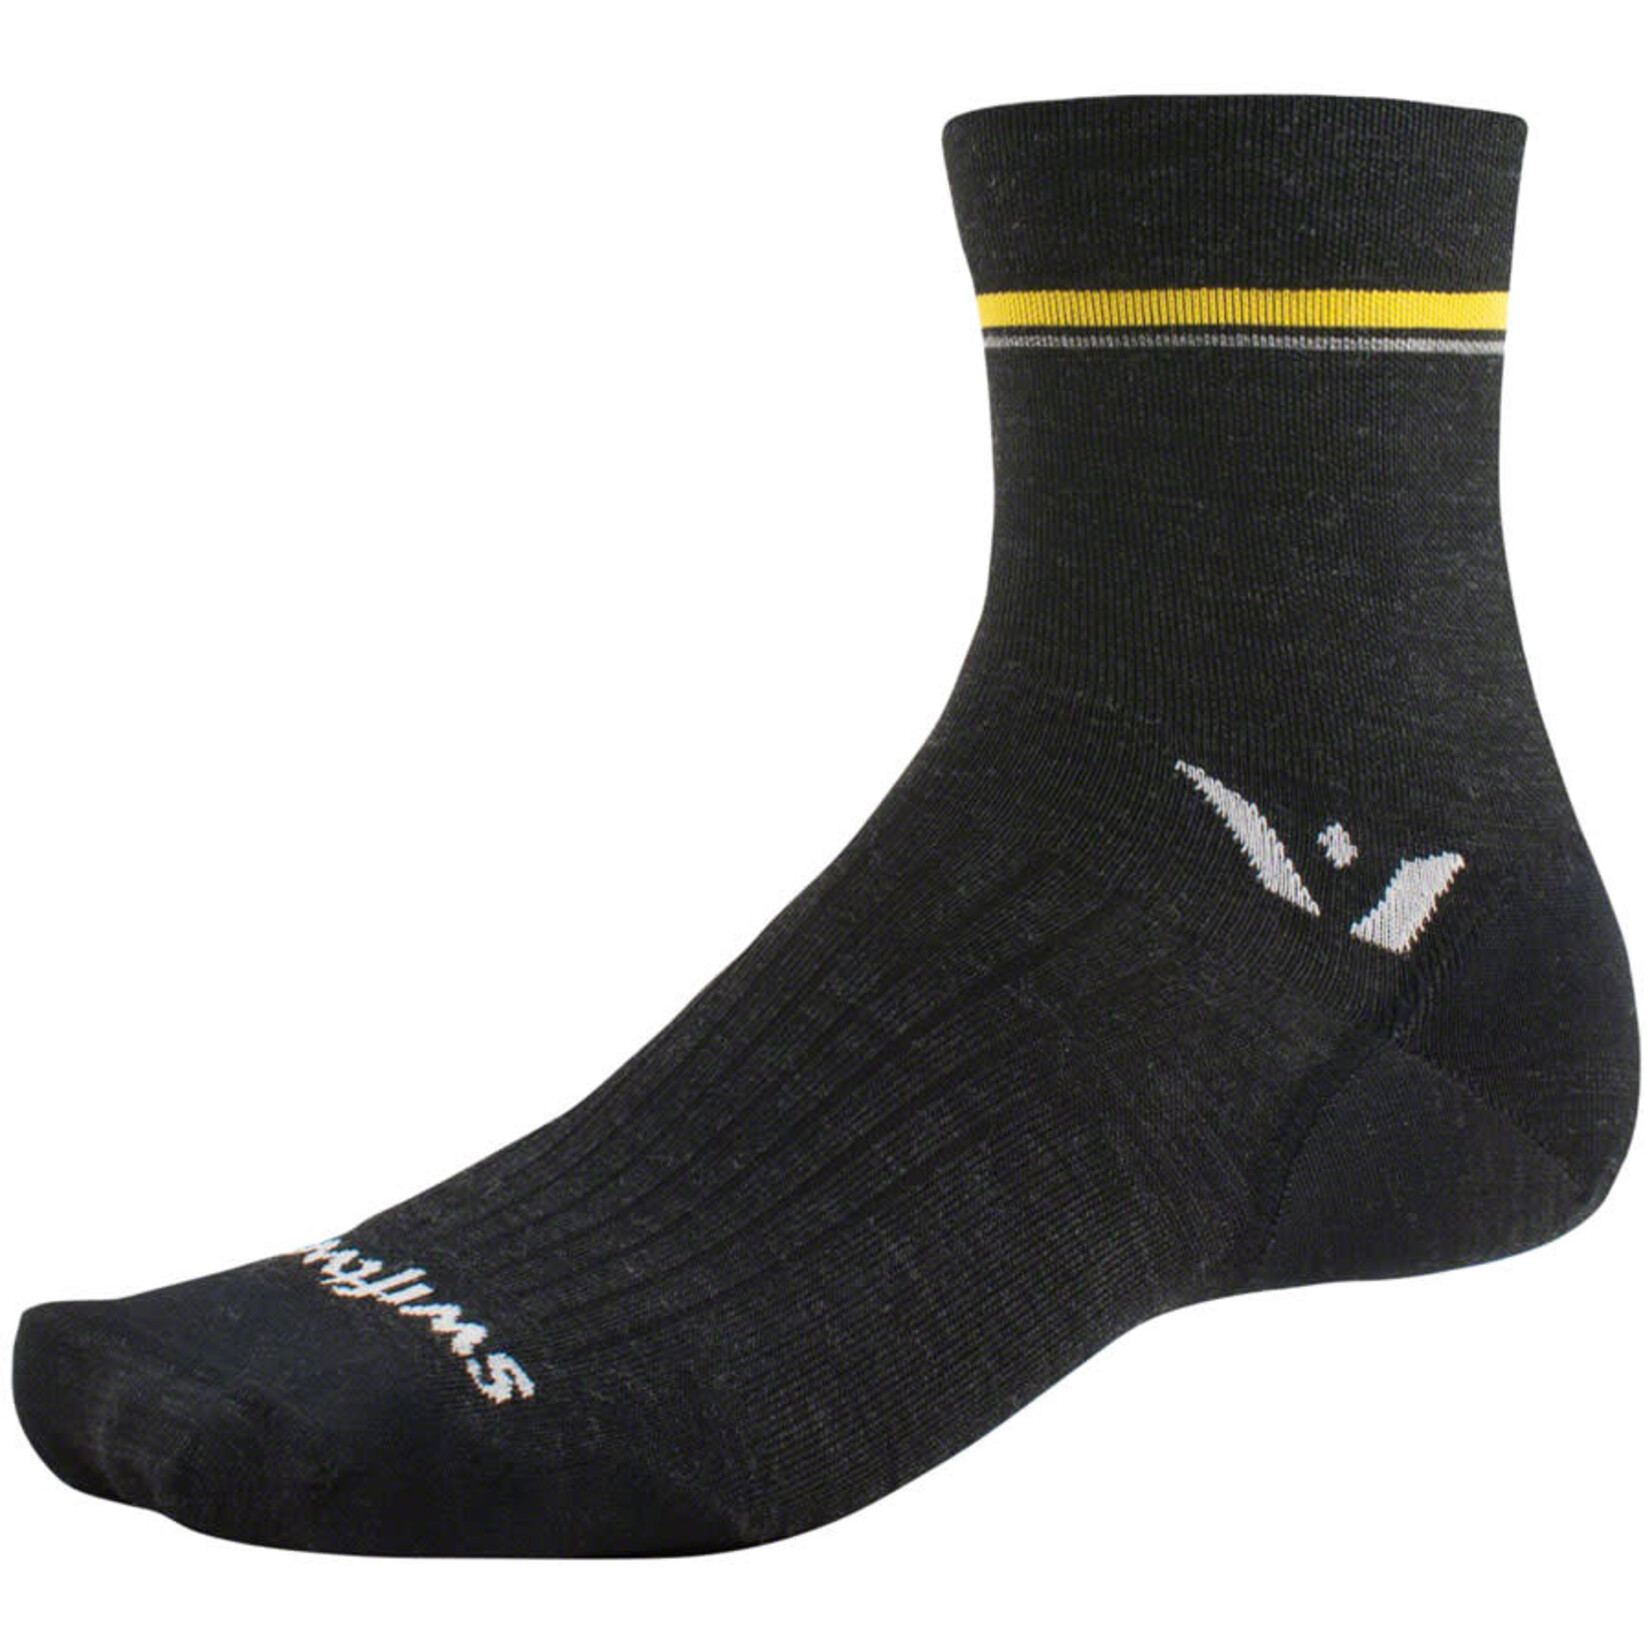 Swiftwick Swiftwick Pursuit Four Ultralight Socks - 4 inch, Retro Stripe Charcoal, Medium